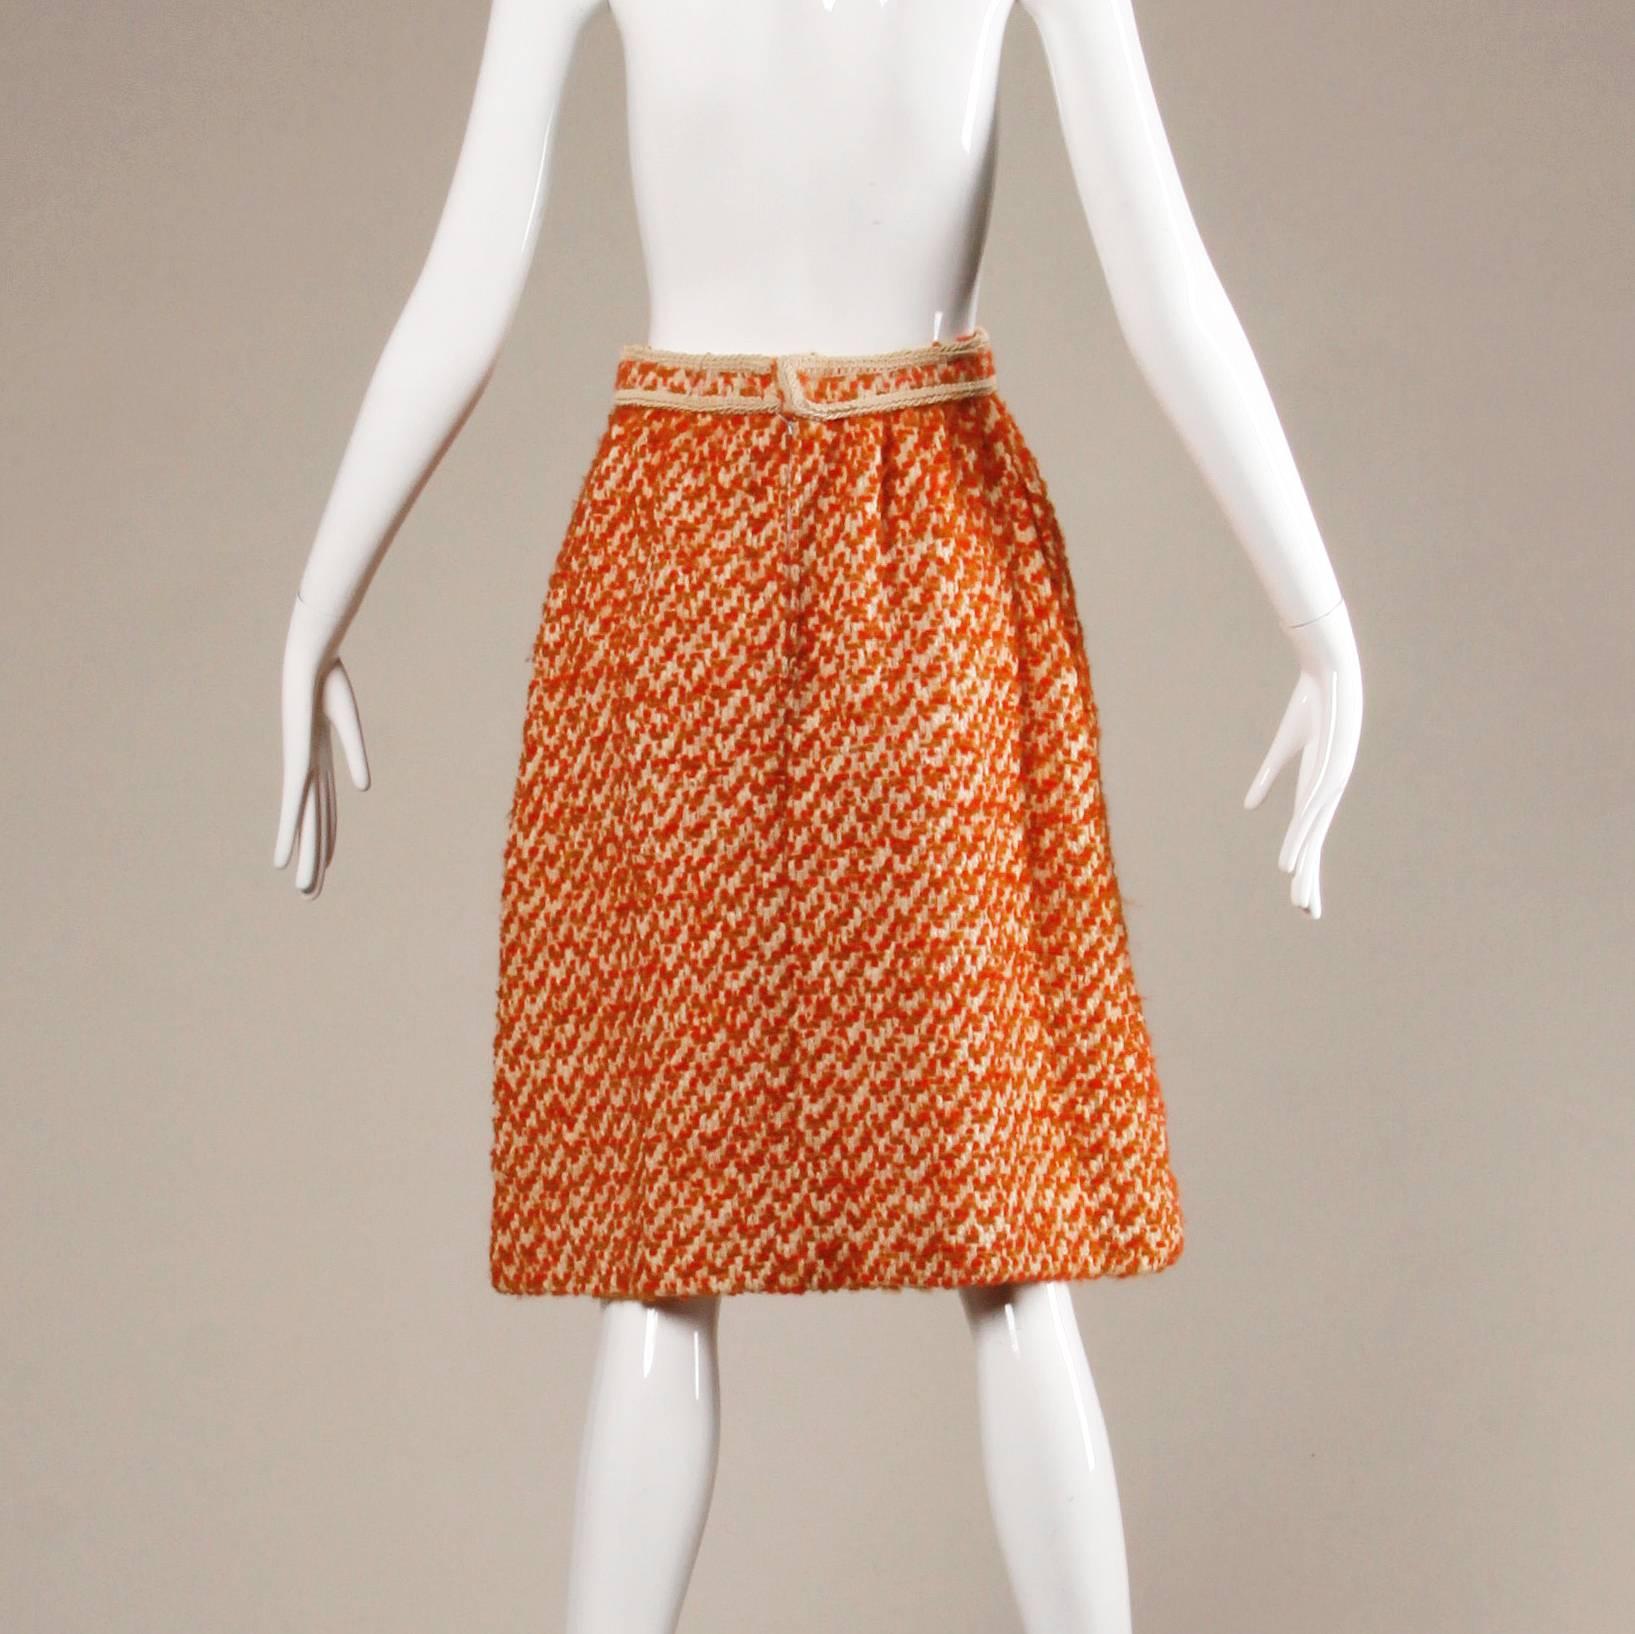 Women's Nina Ricci Vintage 1960s 60s Couture Wool Silk Jacket + Skirt Suit Ensemble For Sale